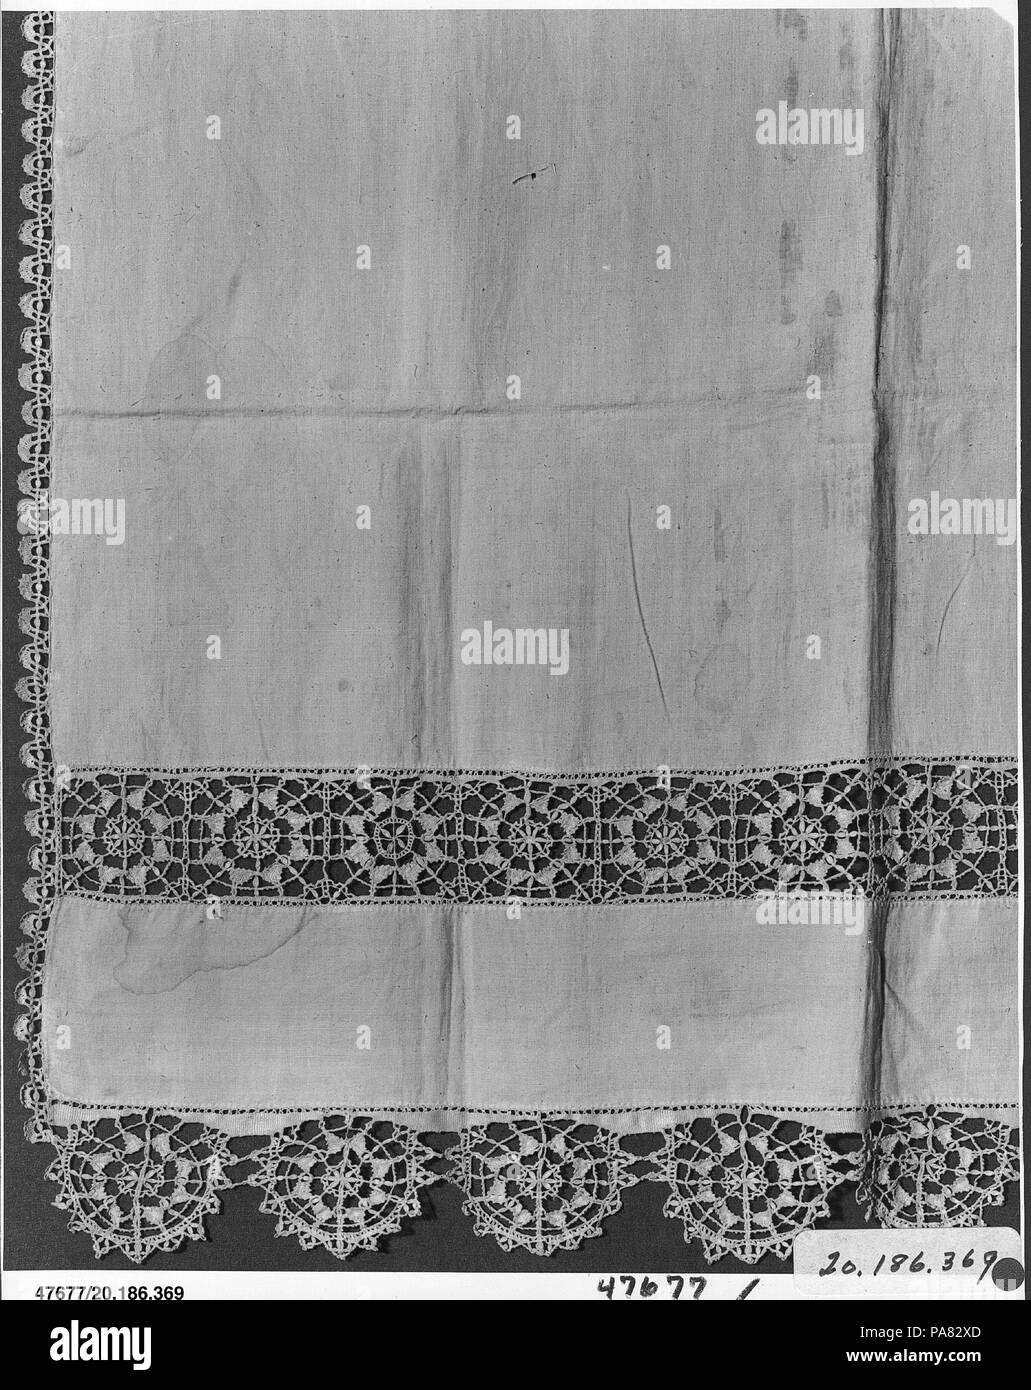 Altar cloth. Culture: Italian, Genoa. Dimensions: L. 57 x W. 30 inches (144.8 x 76.2 cm). Date: second half 16th century. Museum: Metropolitan Museum of Art, New York, USA. Stock Photo